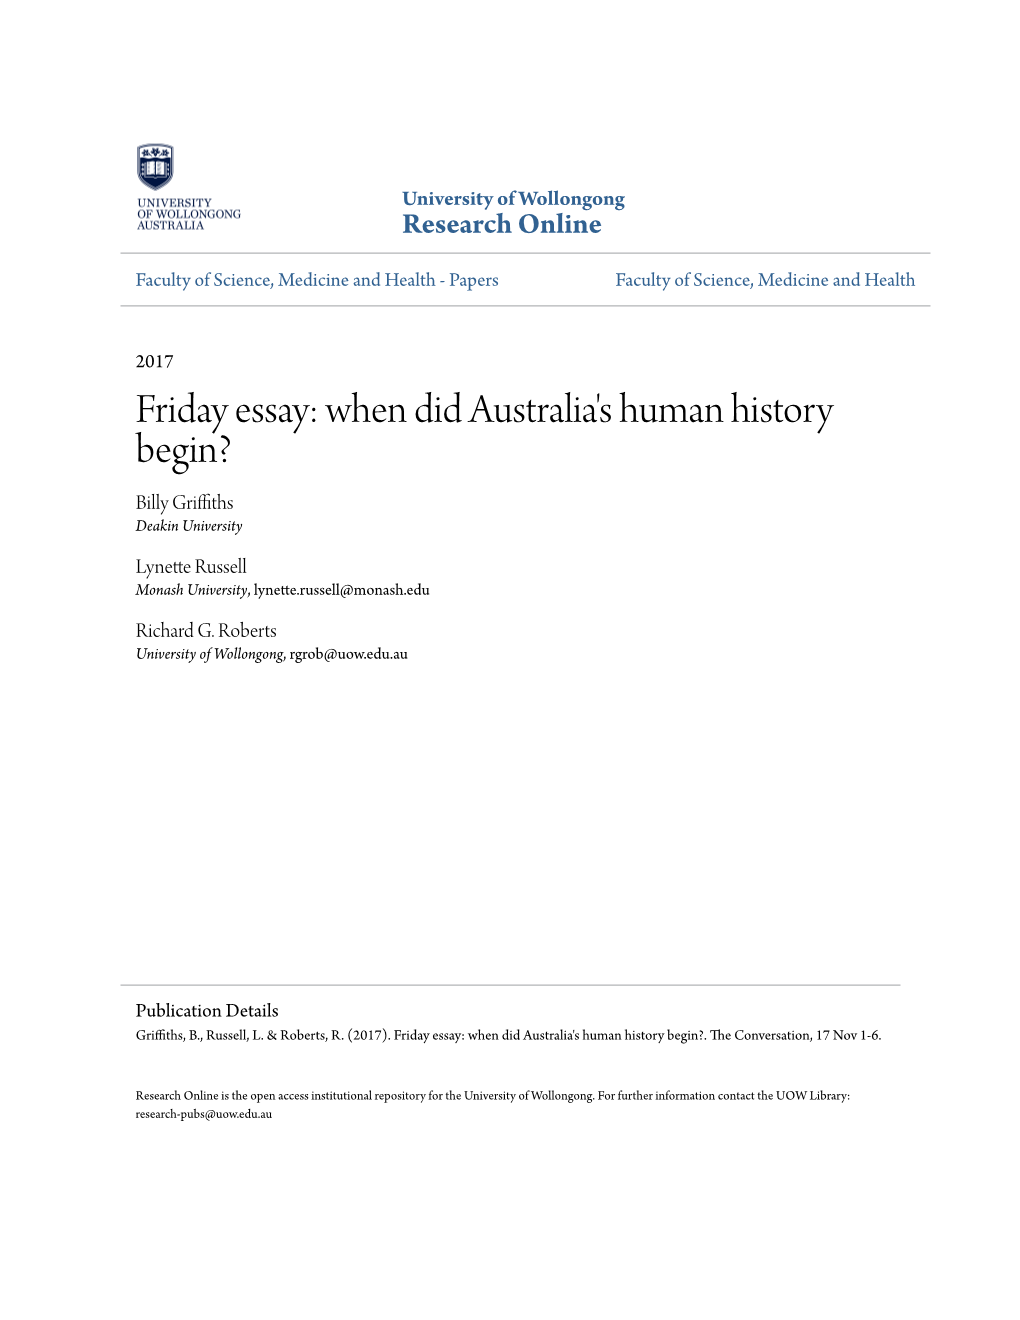 Friday Essay: When Did Australia's Human History Begin? Billy Griffiths Deakin University